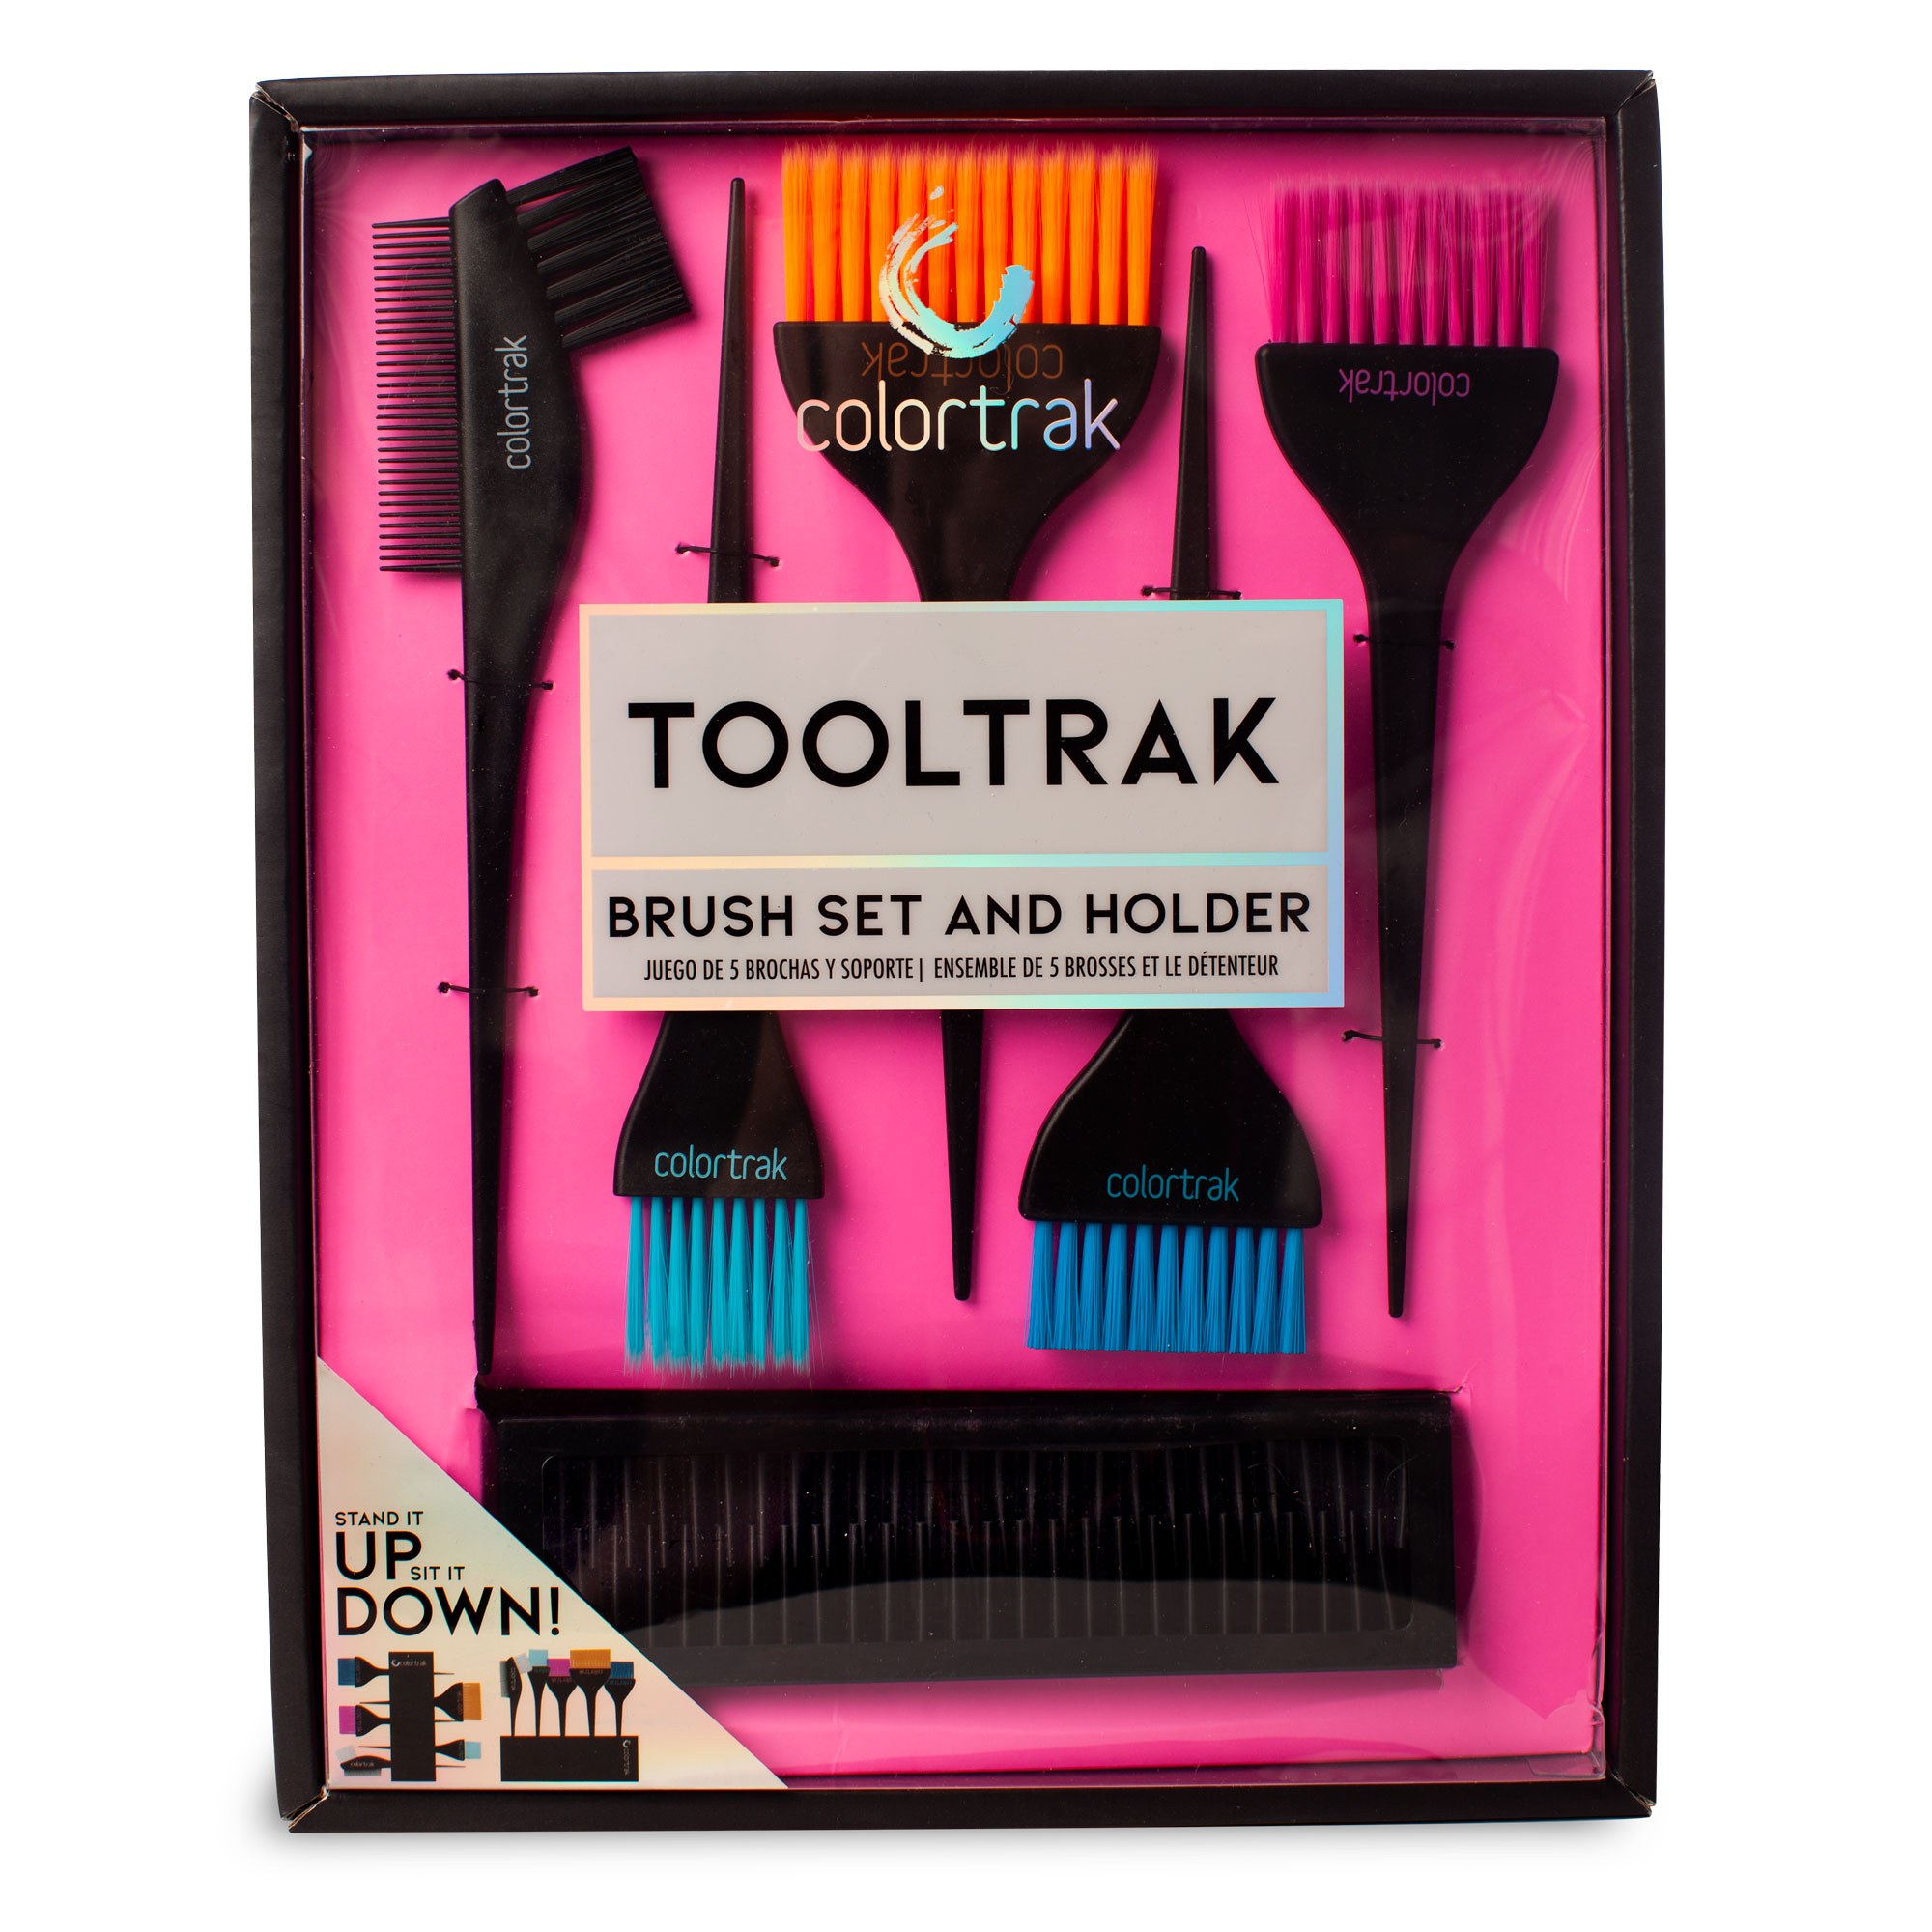 Colortrak Kits: Tooltrak Brush Set and Holder